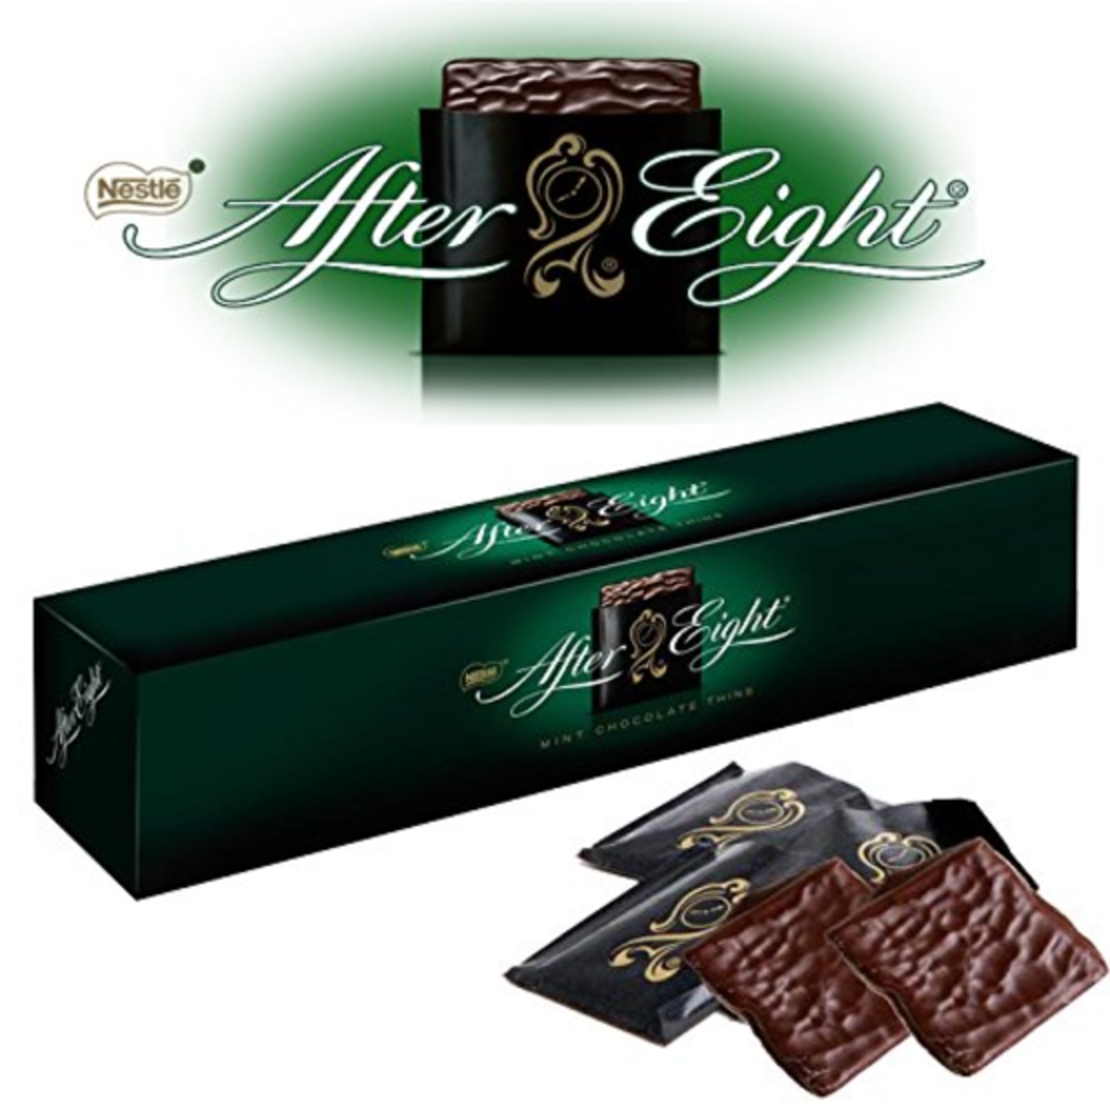 Nestle - After Eight Dark Chocolate thins 400g